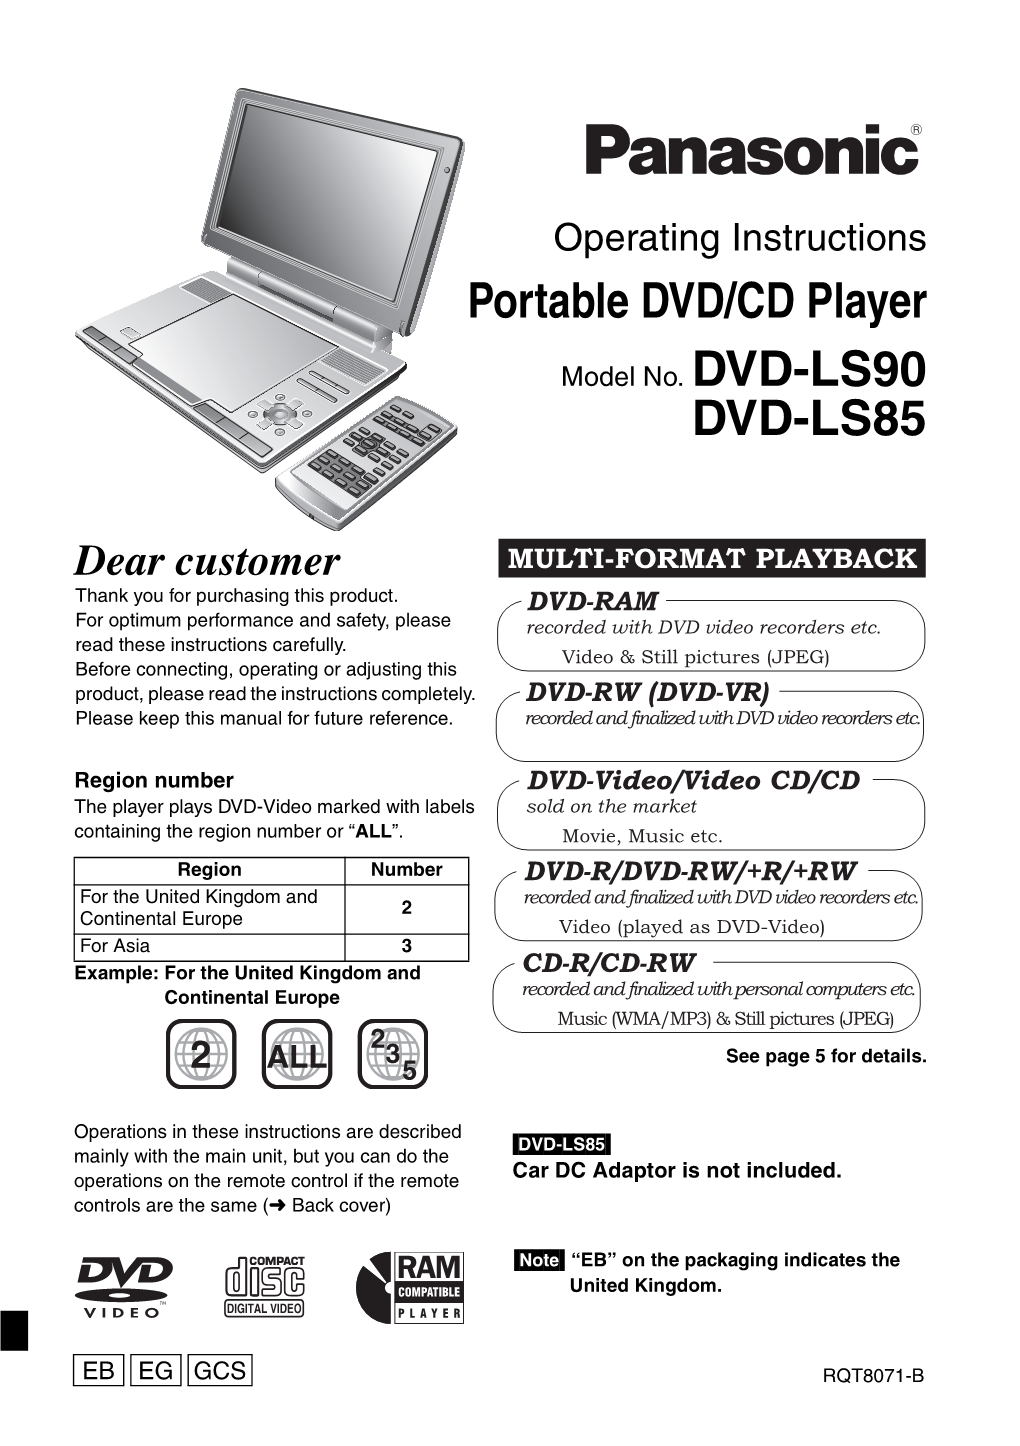 Portable DVD/CD Player DVD-LS85